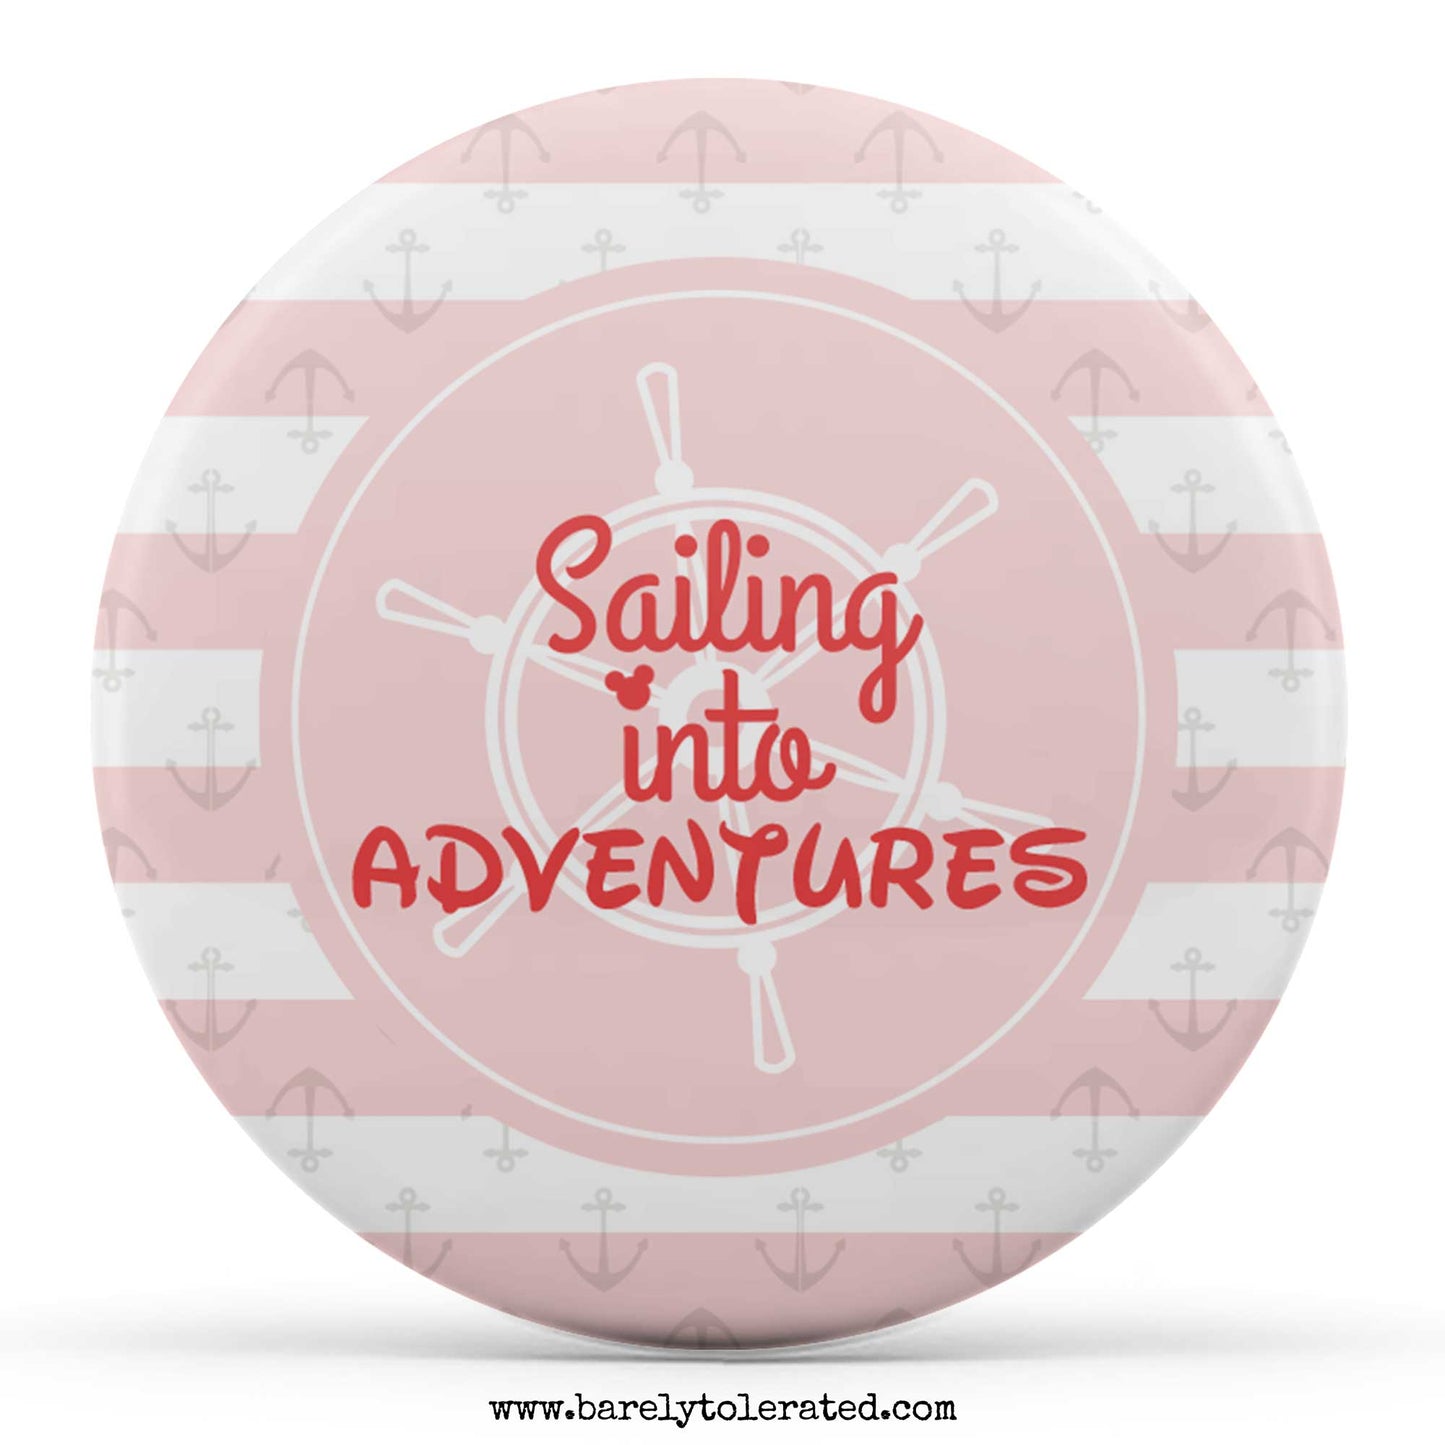 Sailing Into Adventures